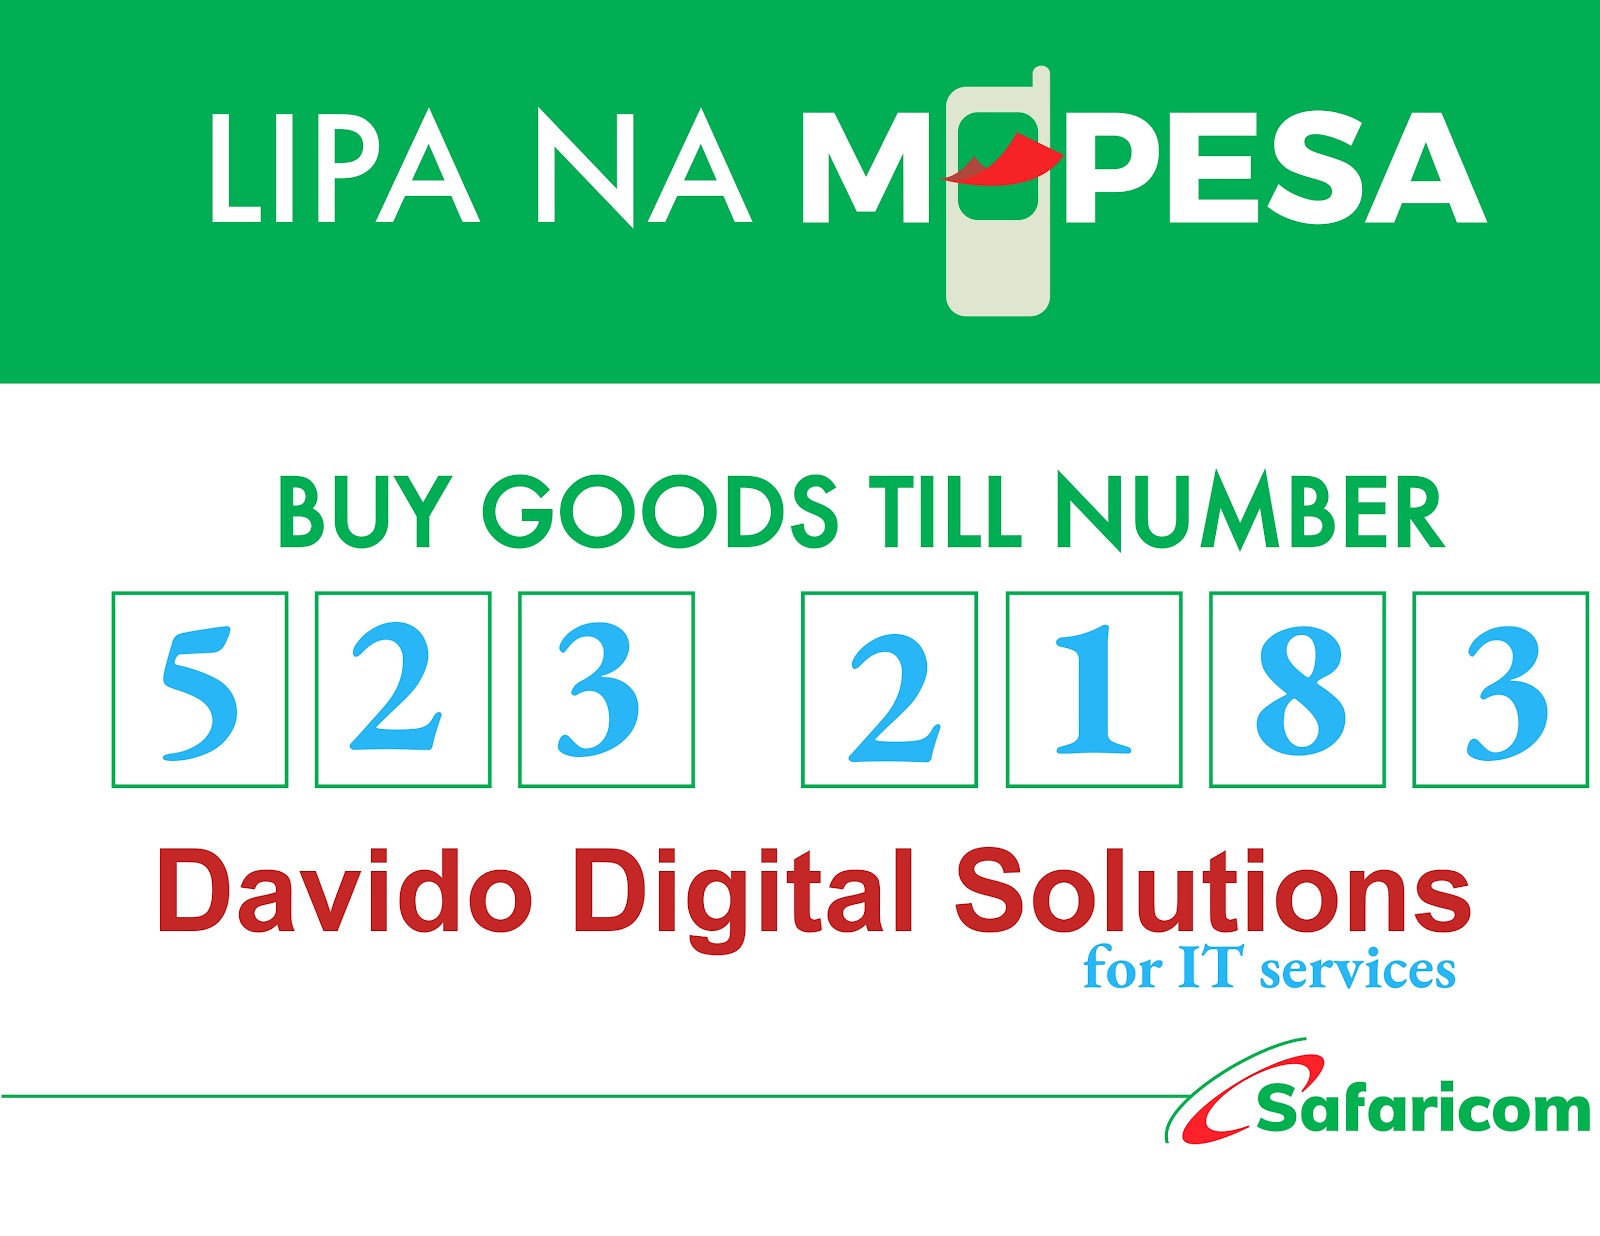 Davido Digital Solutions